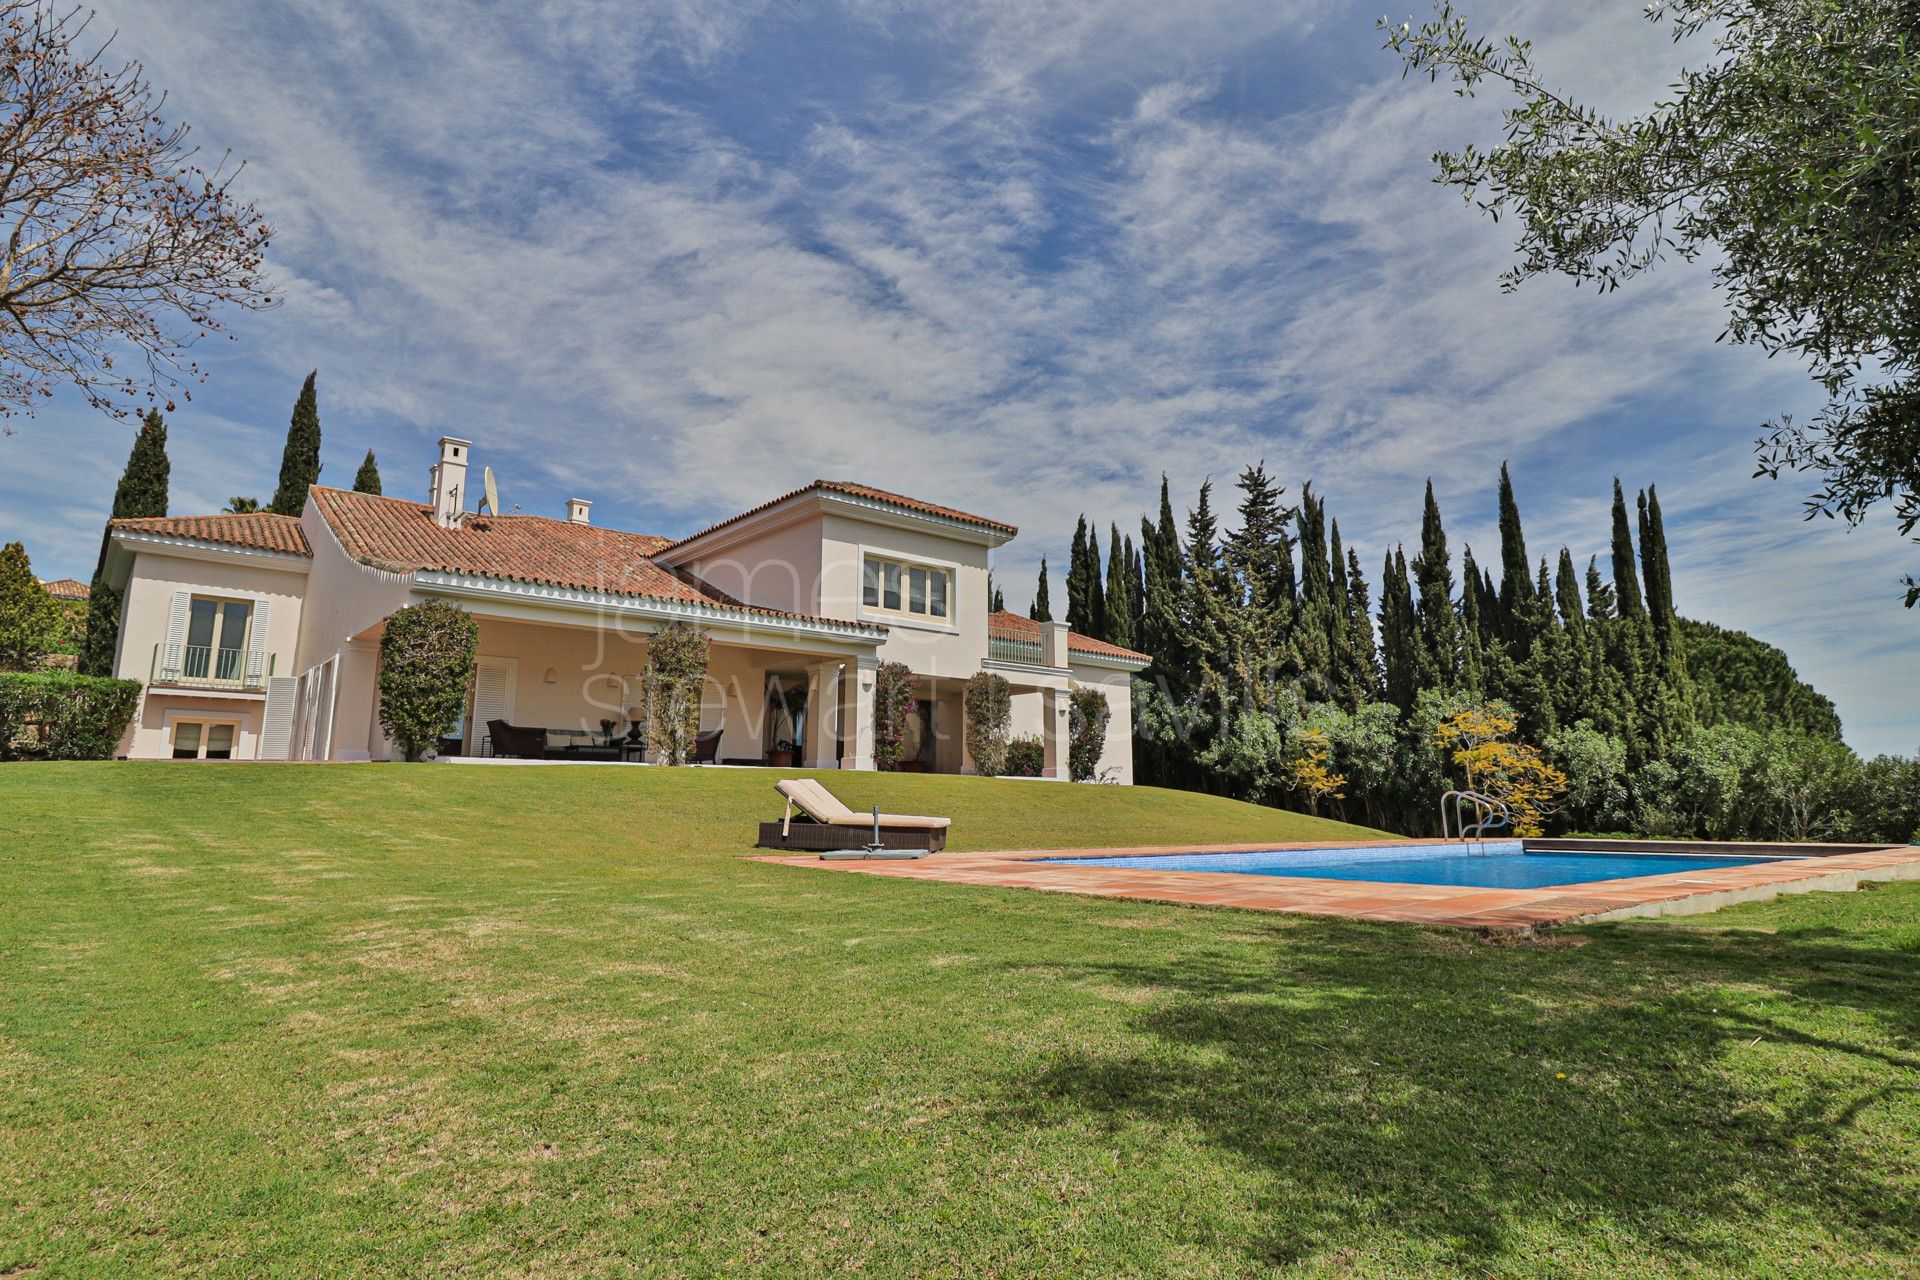 Elegante residencia familiar de estilo andaluz en Sotogrande Alto